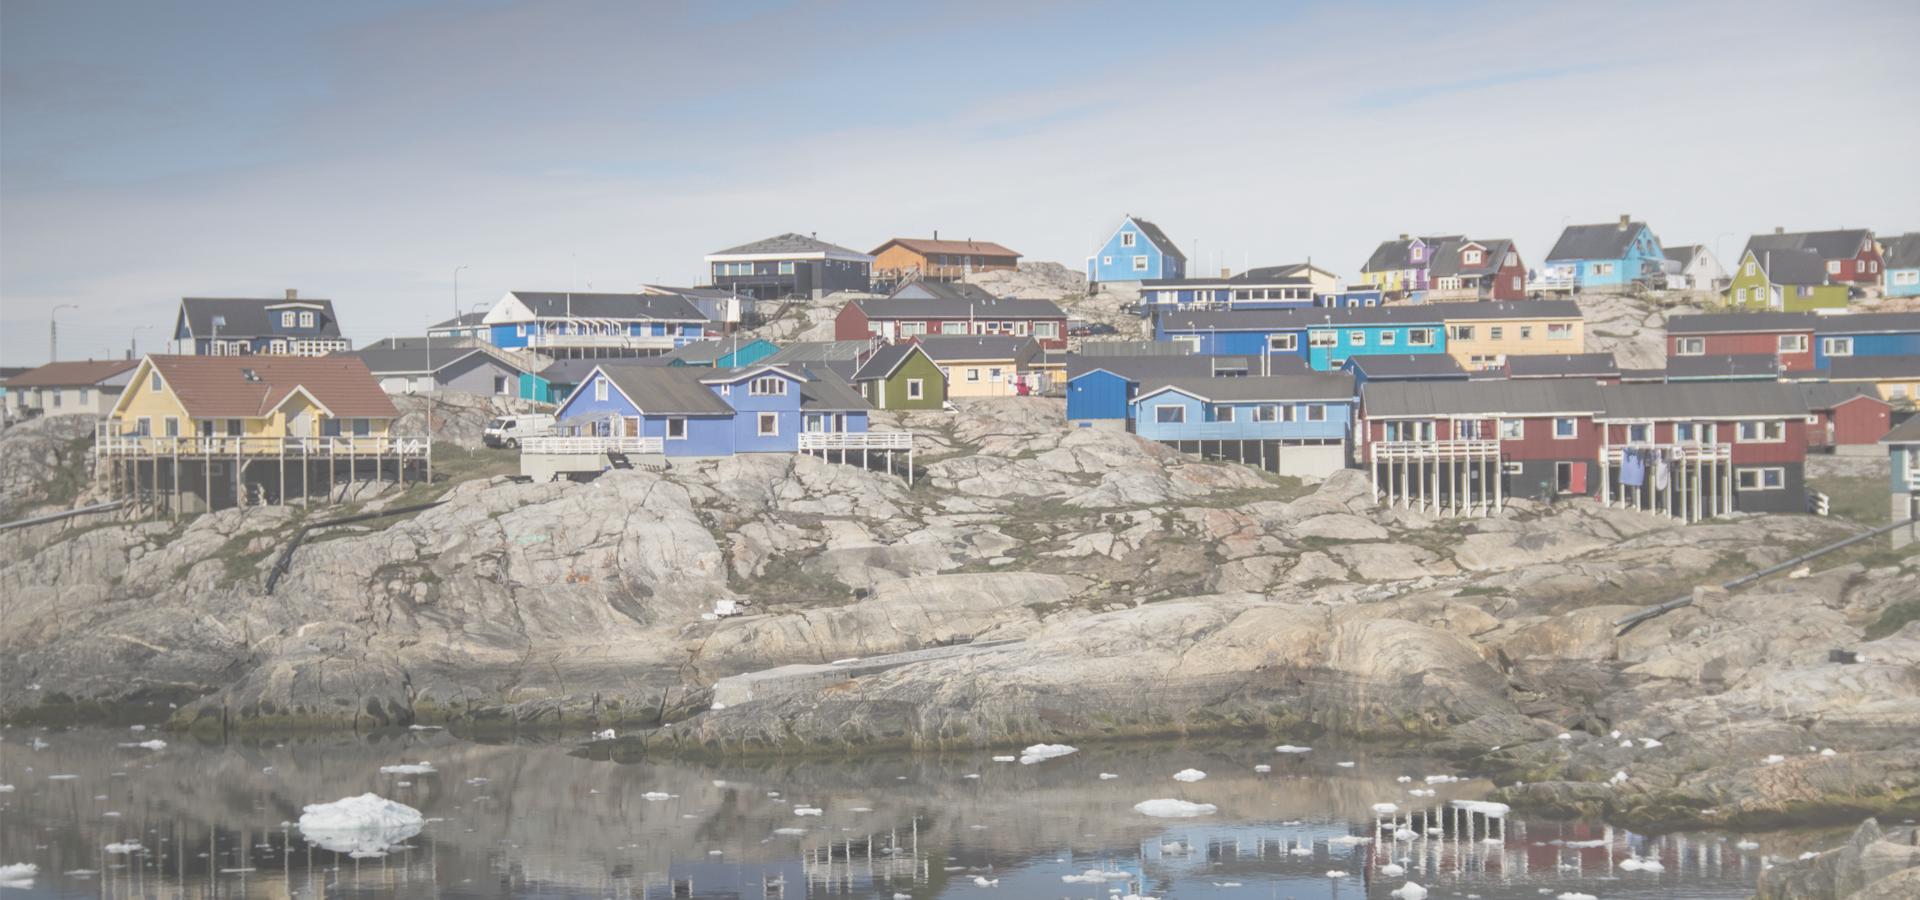 <b>Ilulissat, Avannaata Municipality, Greenland</b>